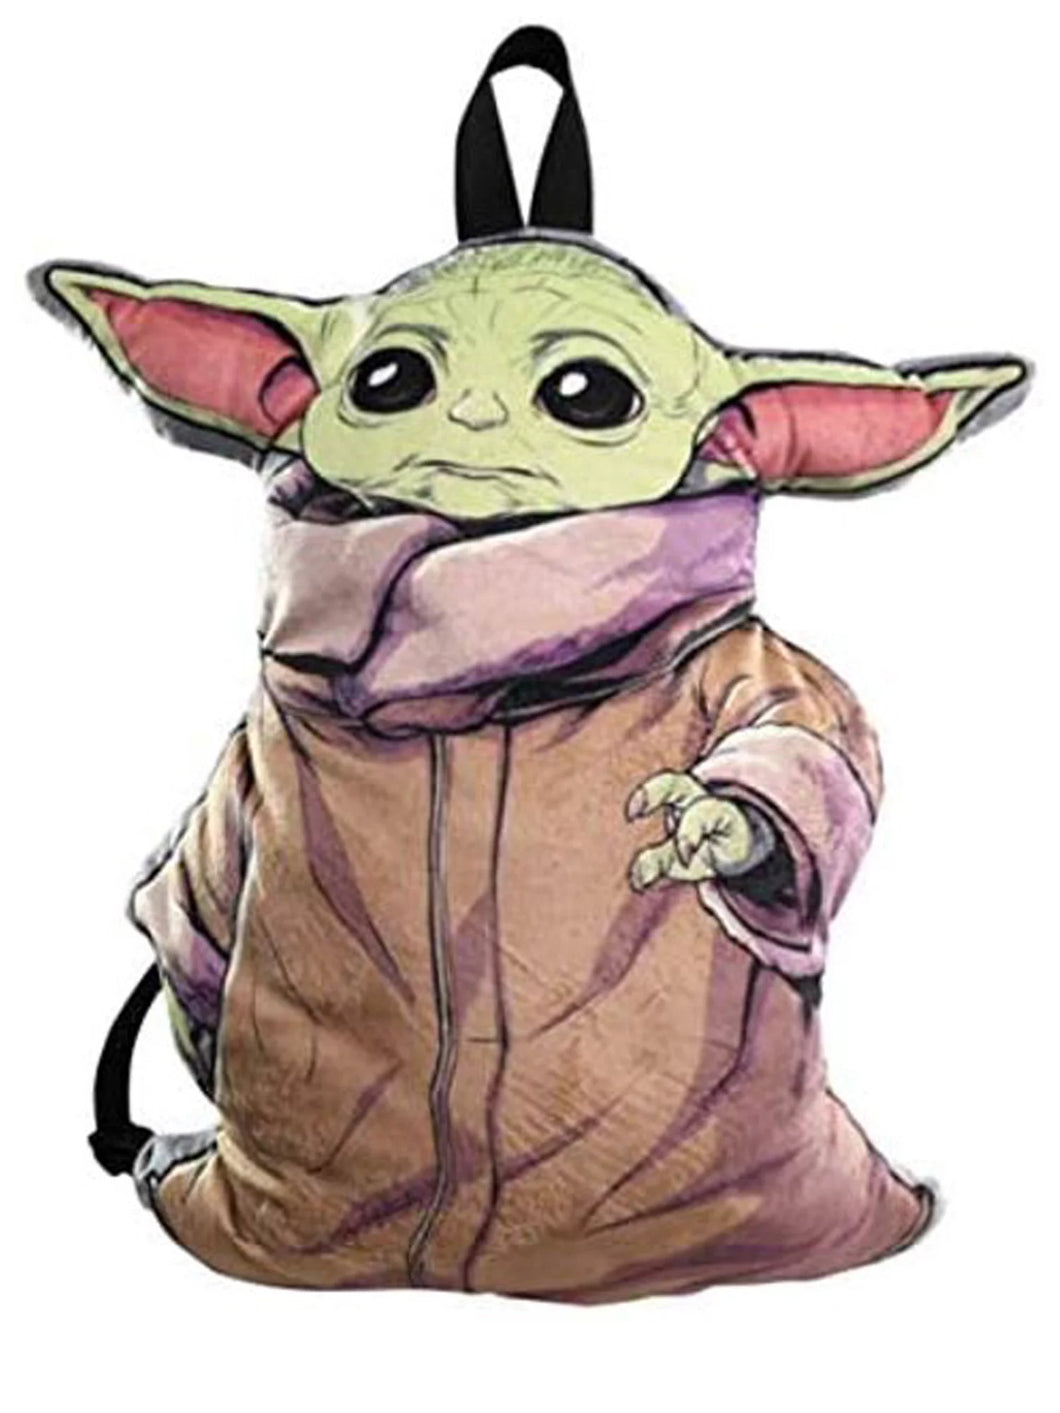 Star Wars Plush Backpack Baby Yoda The Child